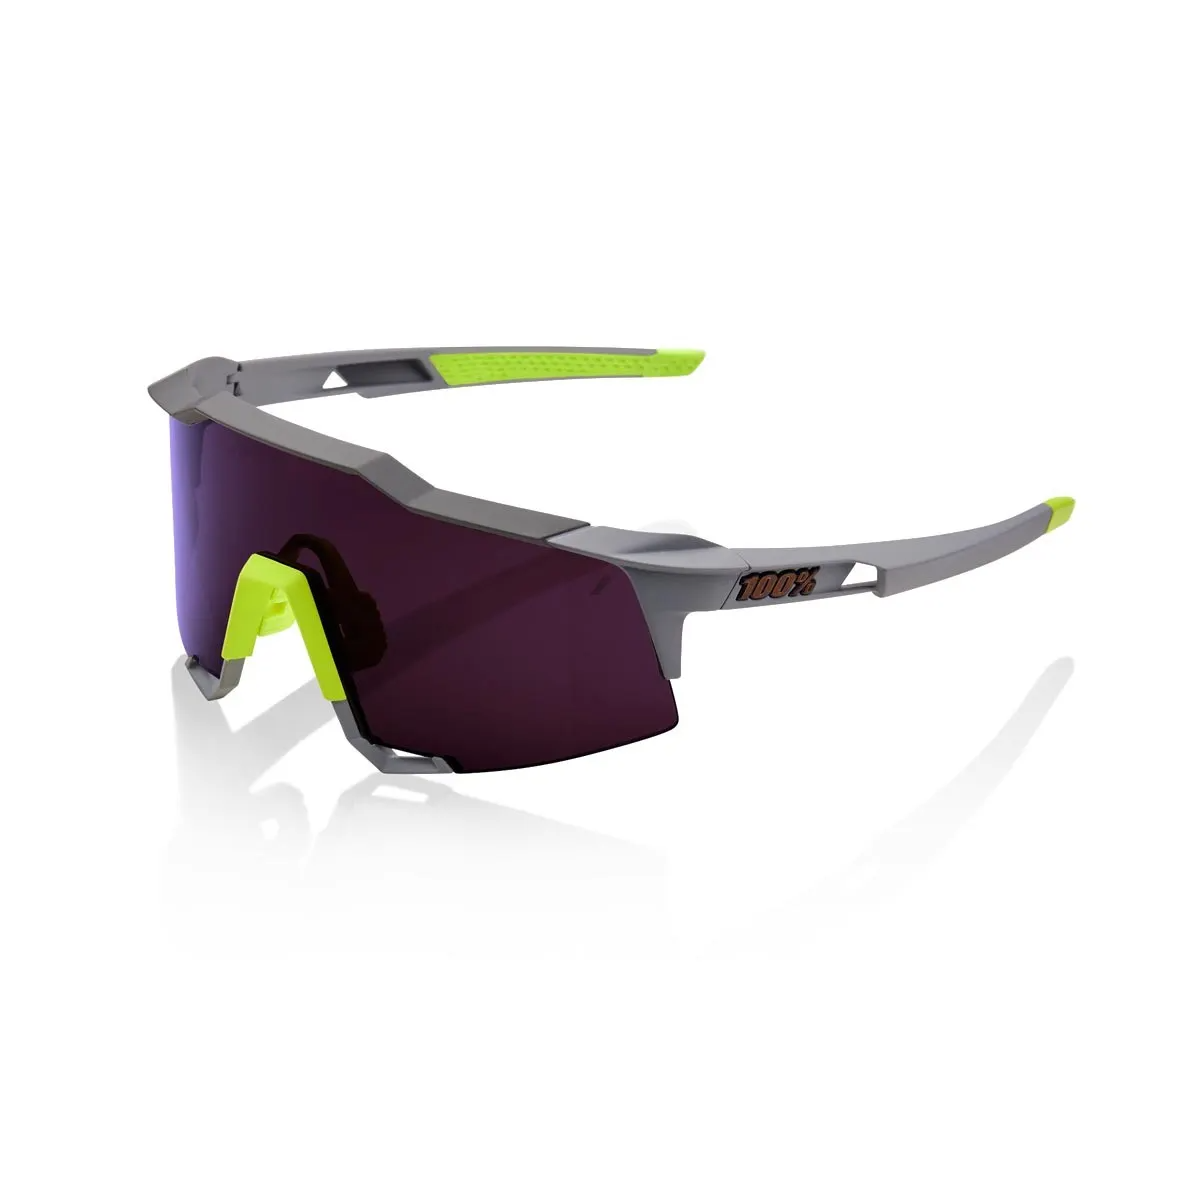 Grey and purple 100% sunglasses